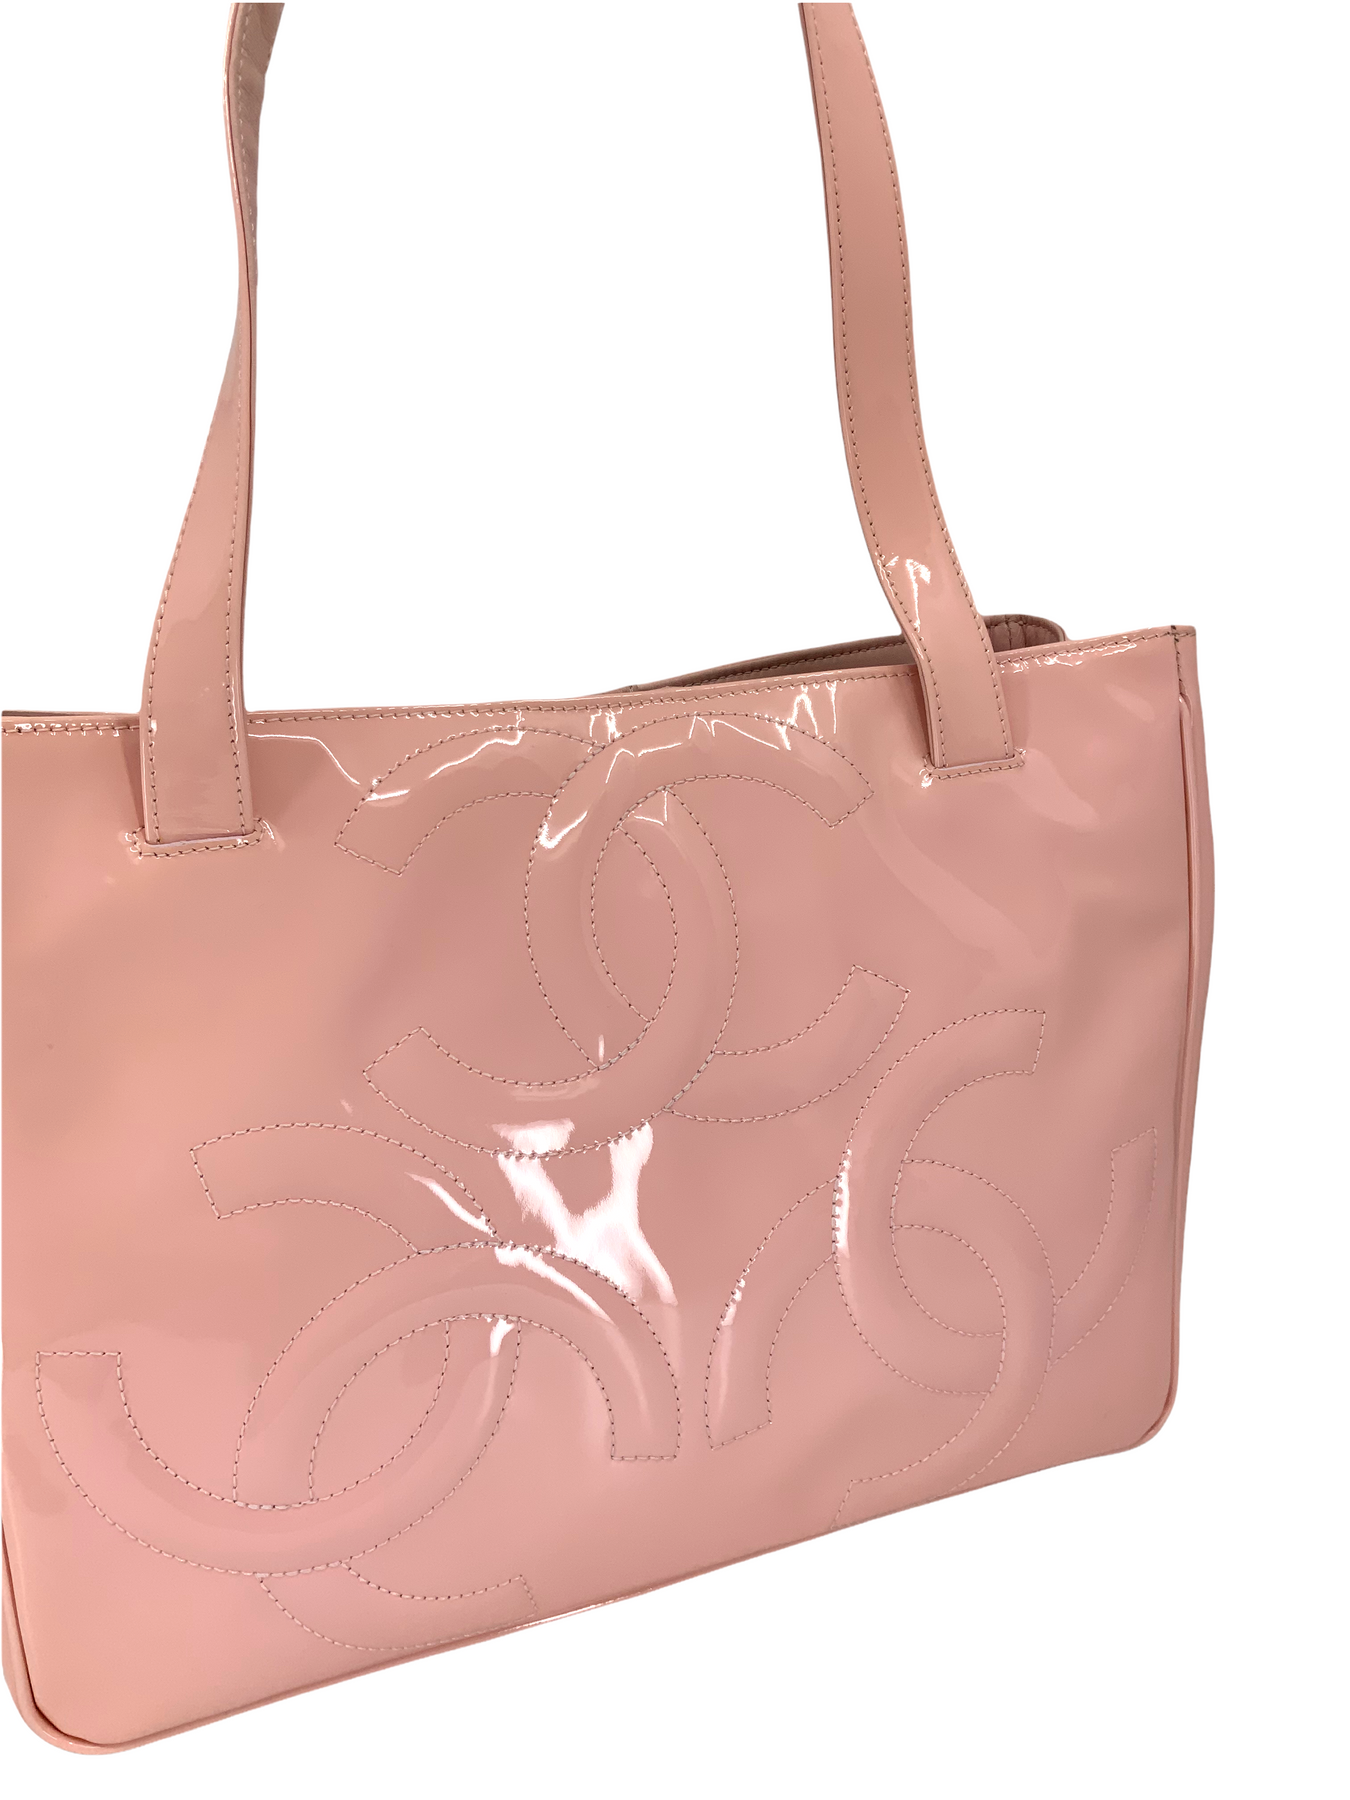 chanel patent leather tote bag mini